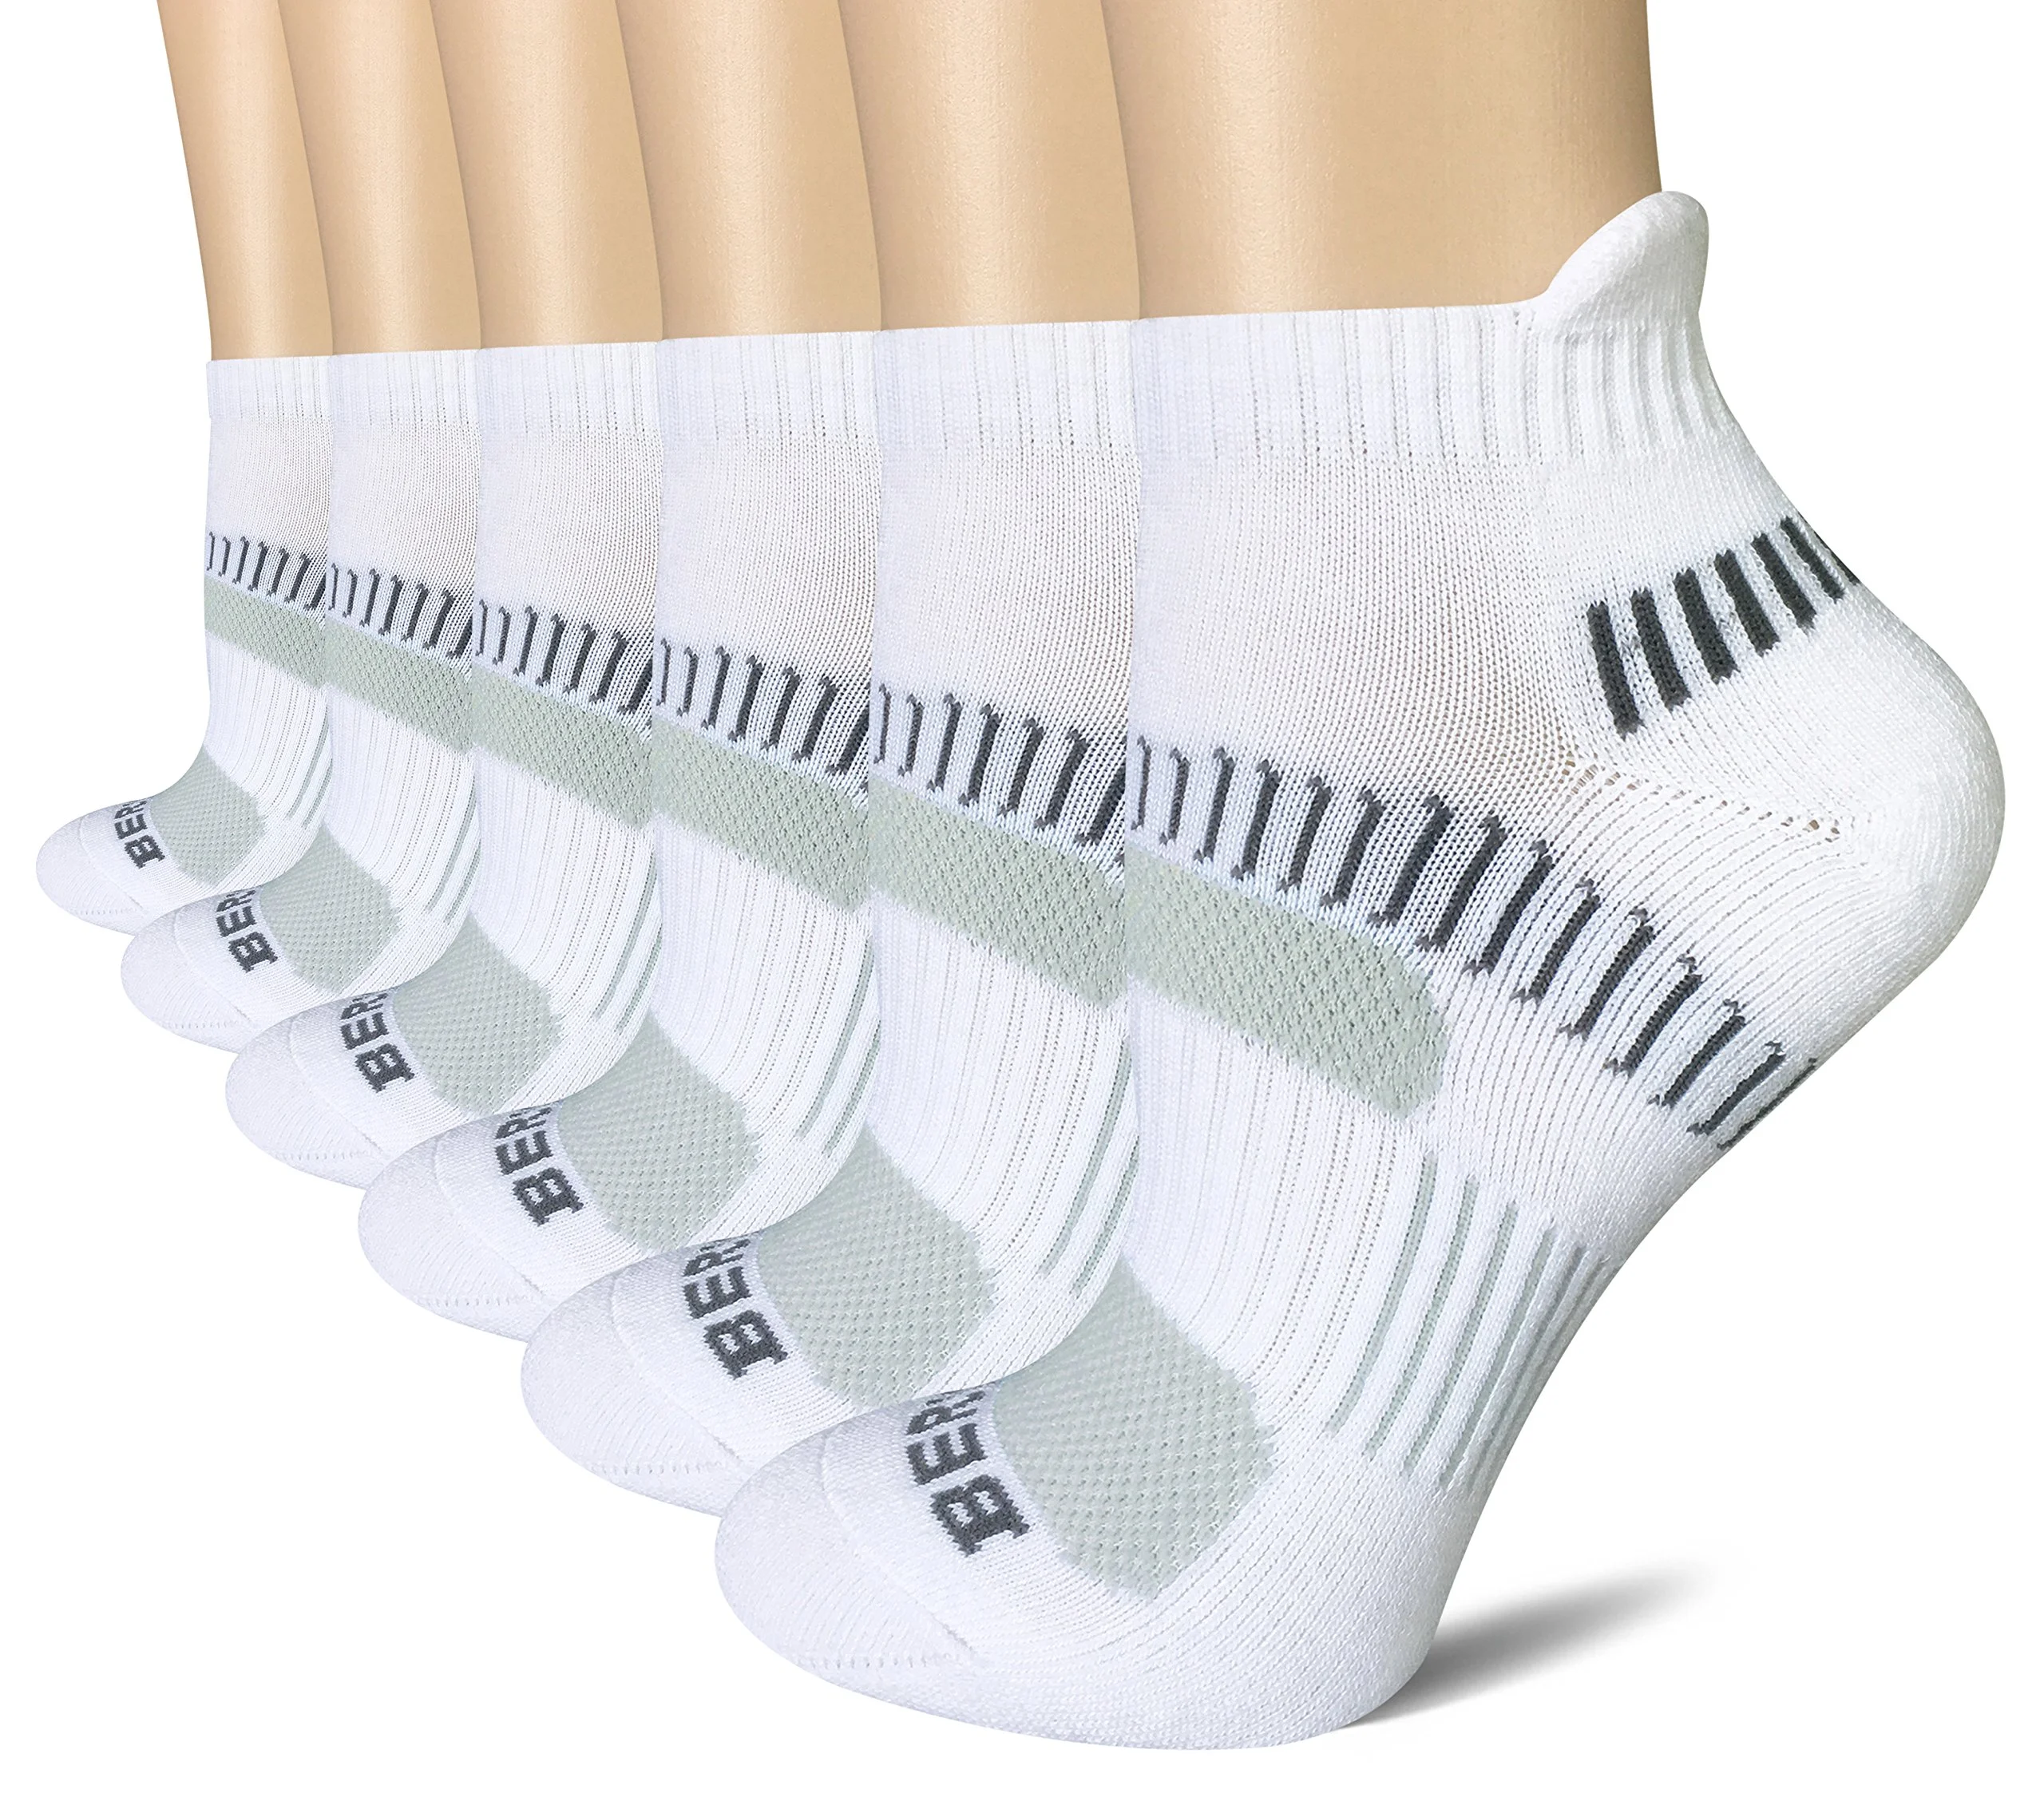 Bering + Women’s Performance Athletic Running Socks (6 Pair Pack)